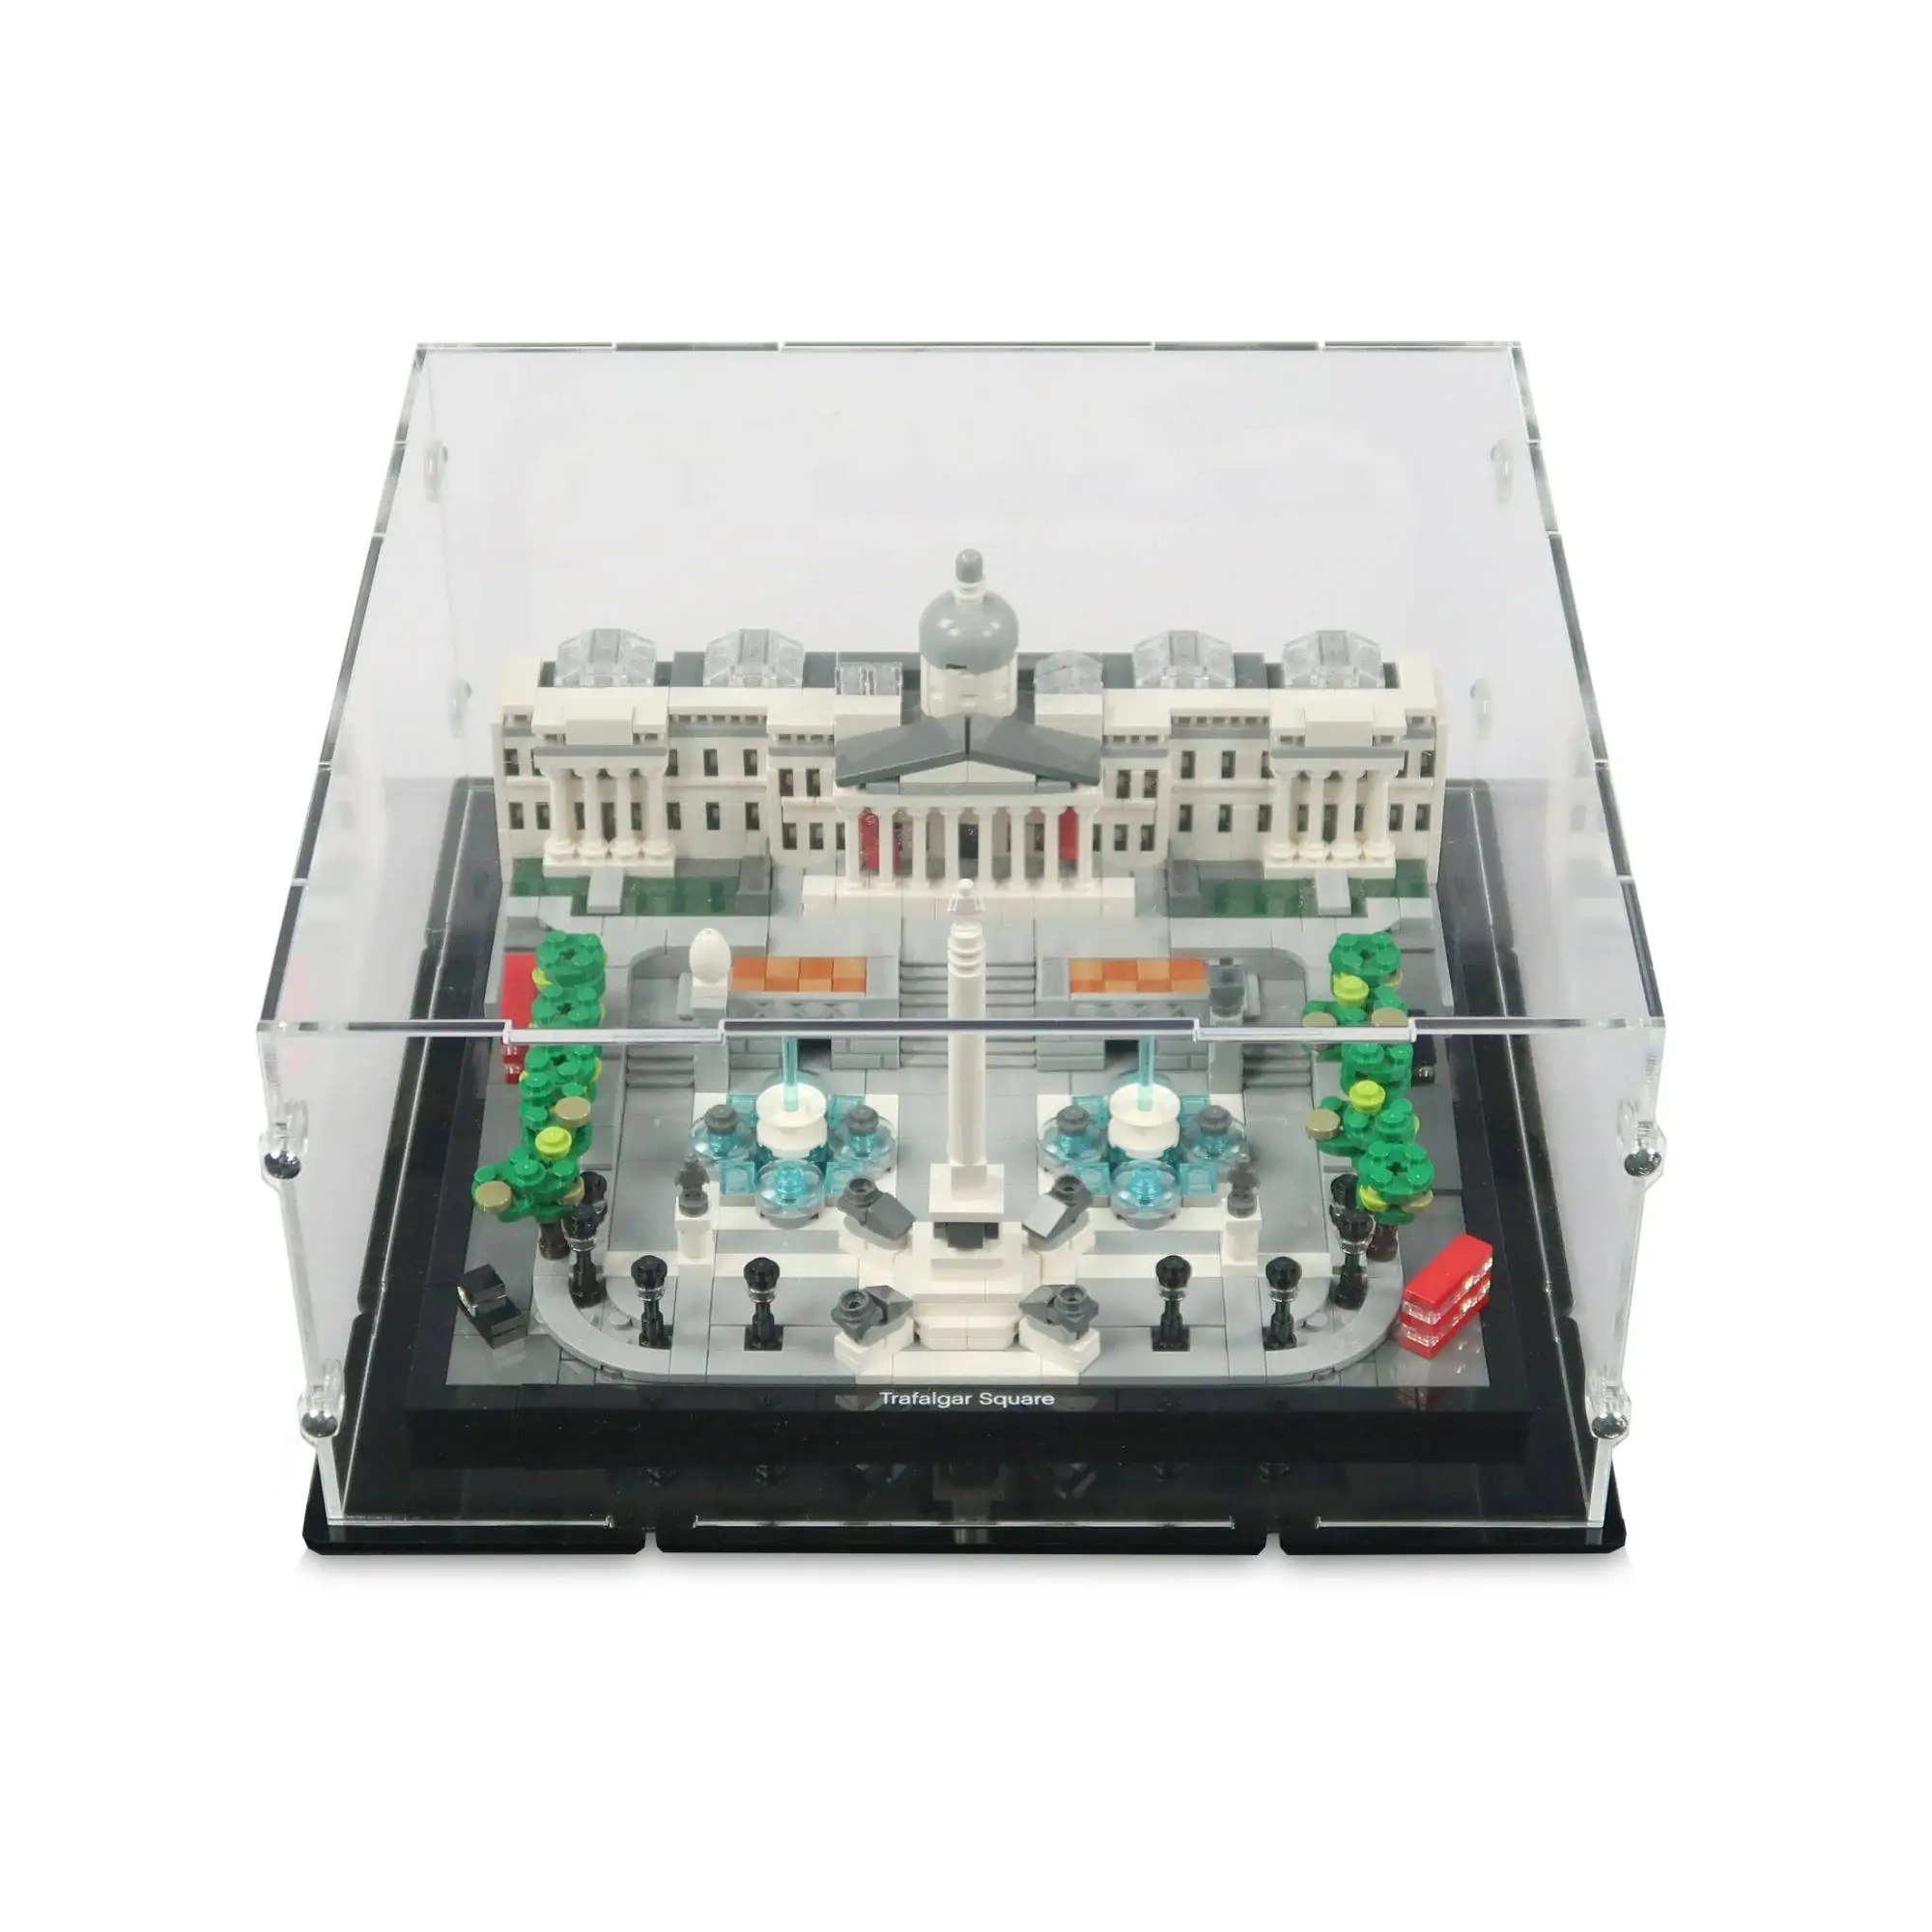 Display for LEGO Architecture Trafalgar Square |